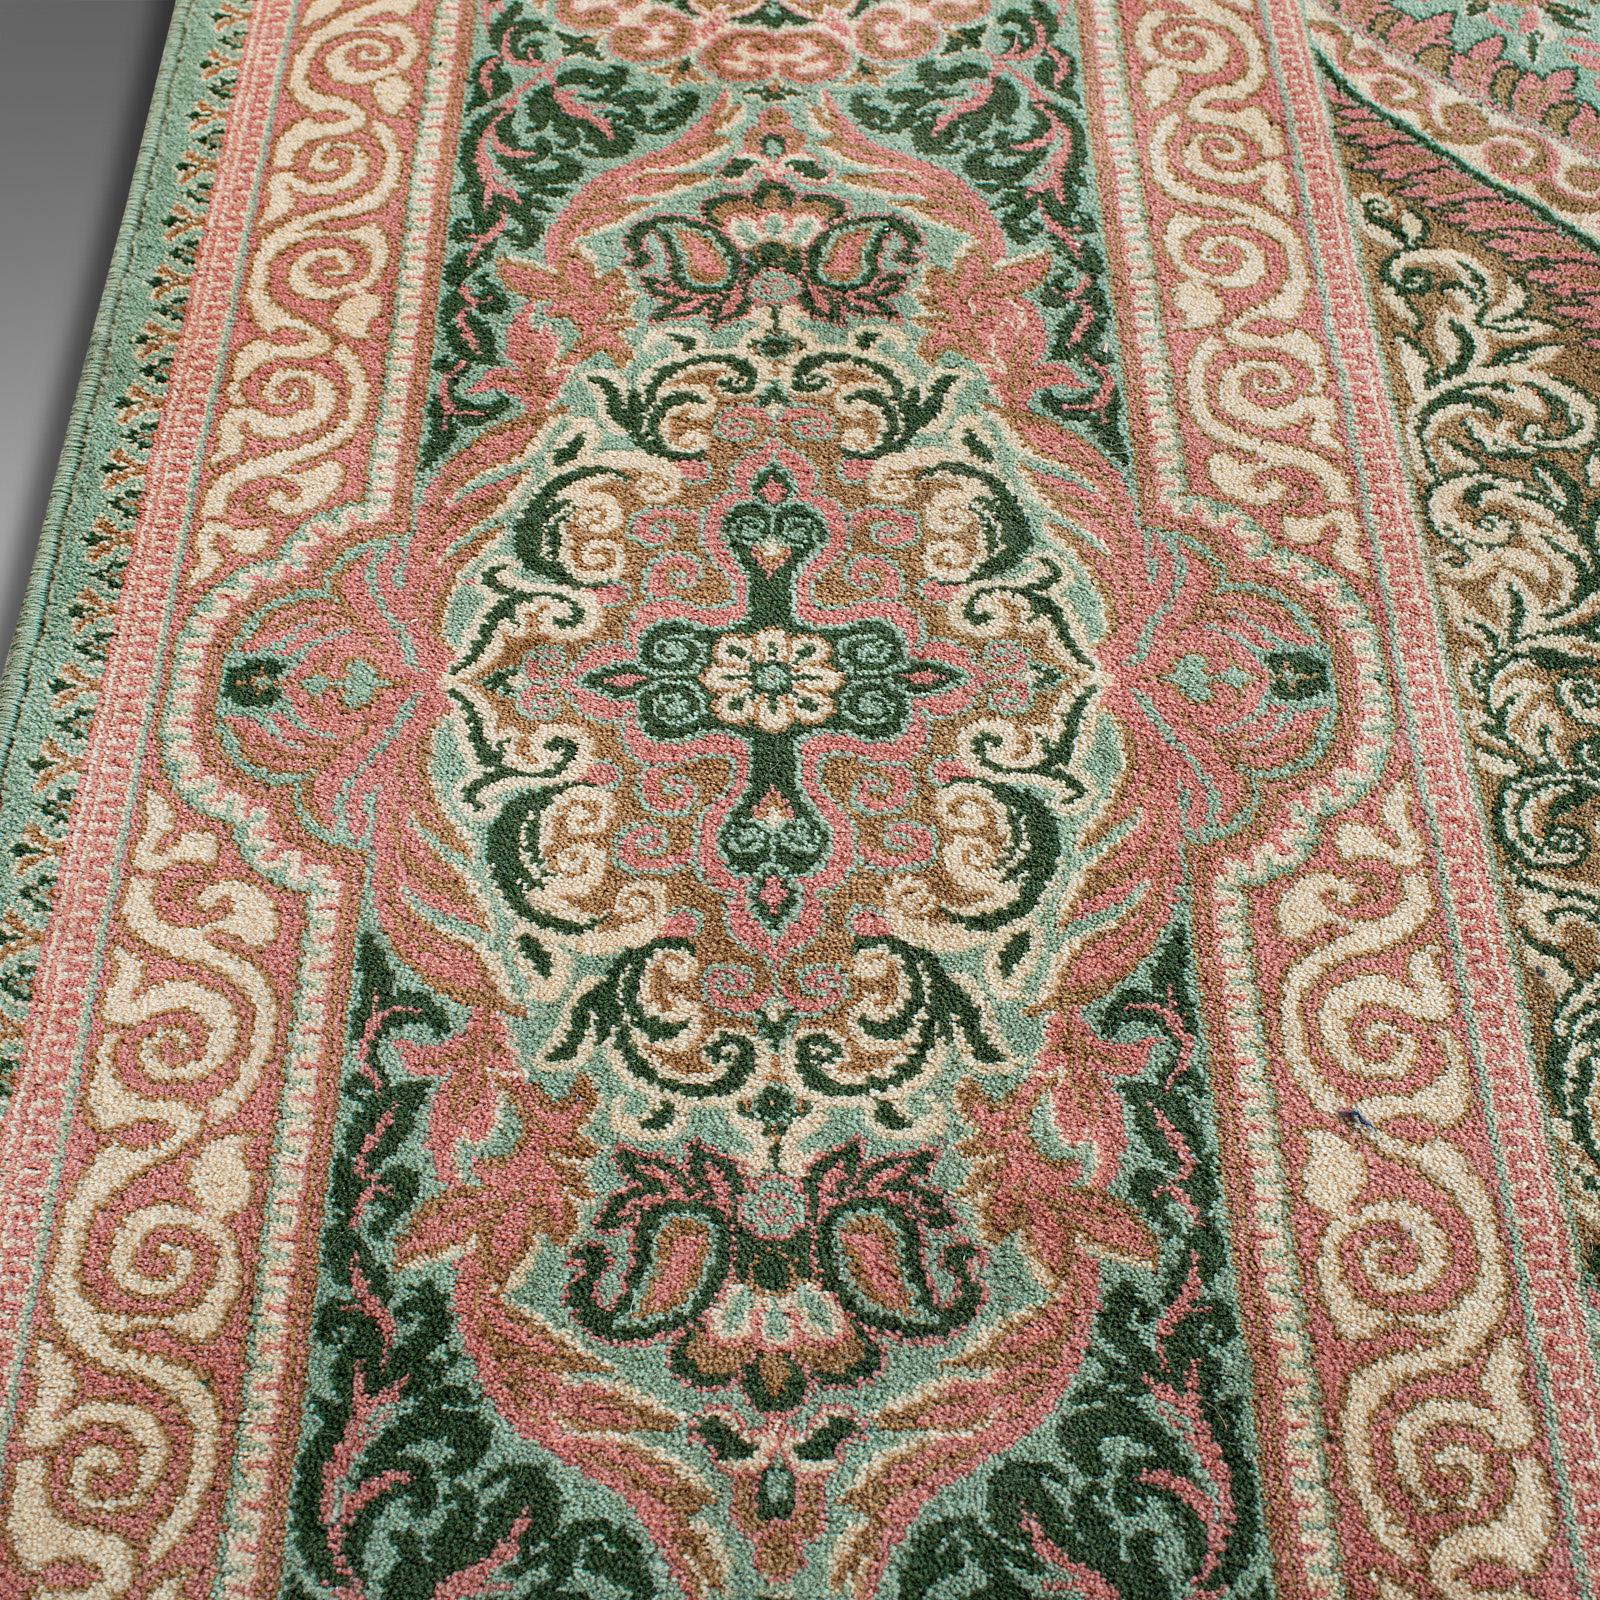 Very Large 16 Foot Vintage Keshan Rug, Persian, Room Sized, Decorative, Carpet For Sale 2